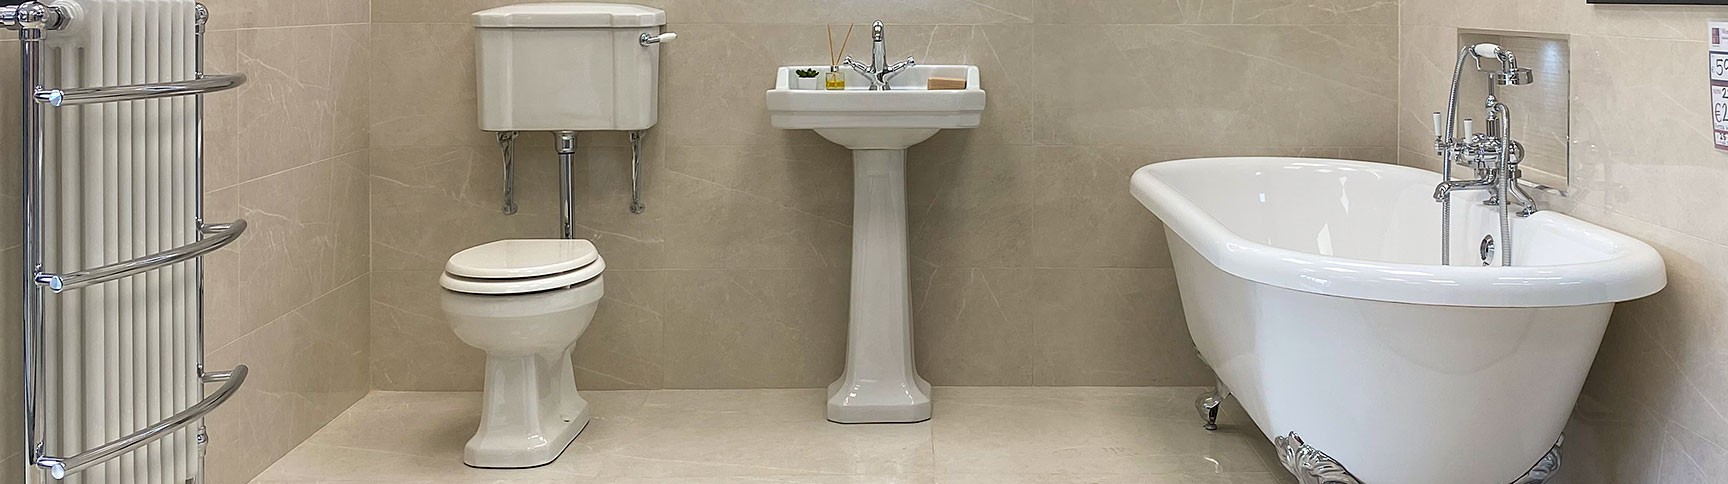 Basin & Pedestal | Great Value Prices | World of Tiles, Bathrooms & Wood Flooring